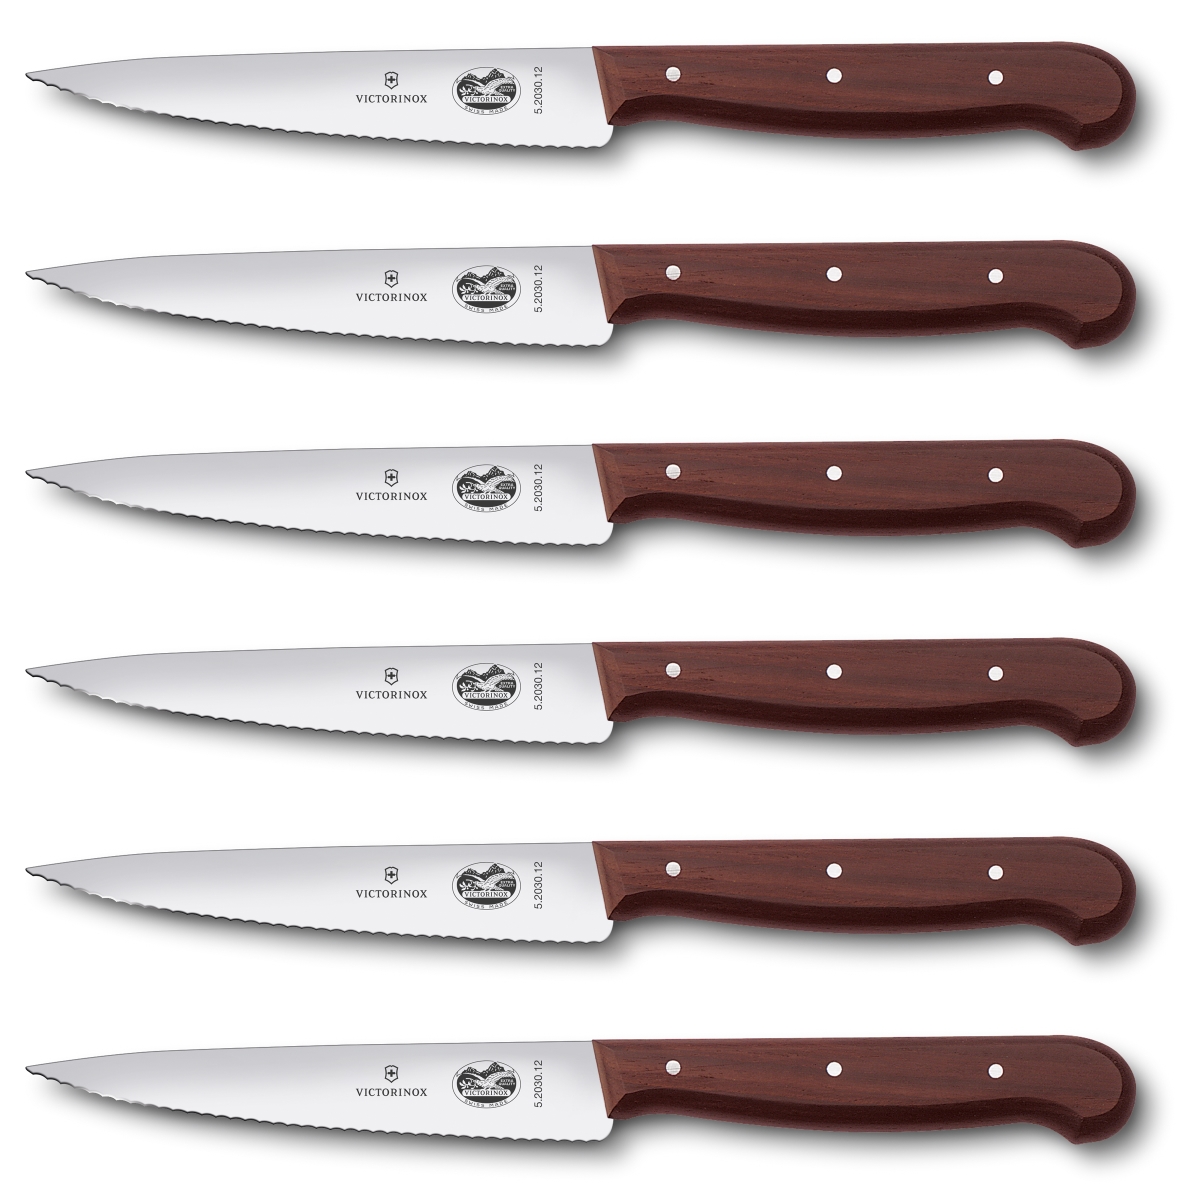 Swiss Arms Swiss Army Brands VIC-46003 2019 Victorinox Wood Steak Knife Set - 6 Piece